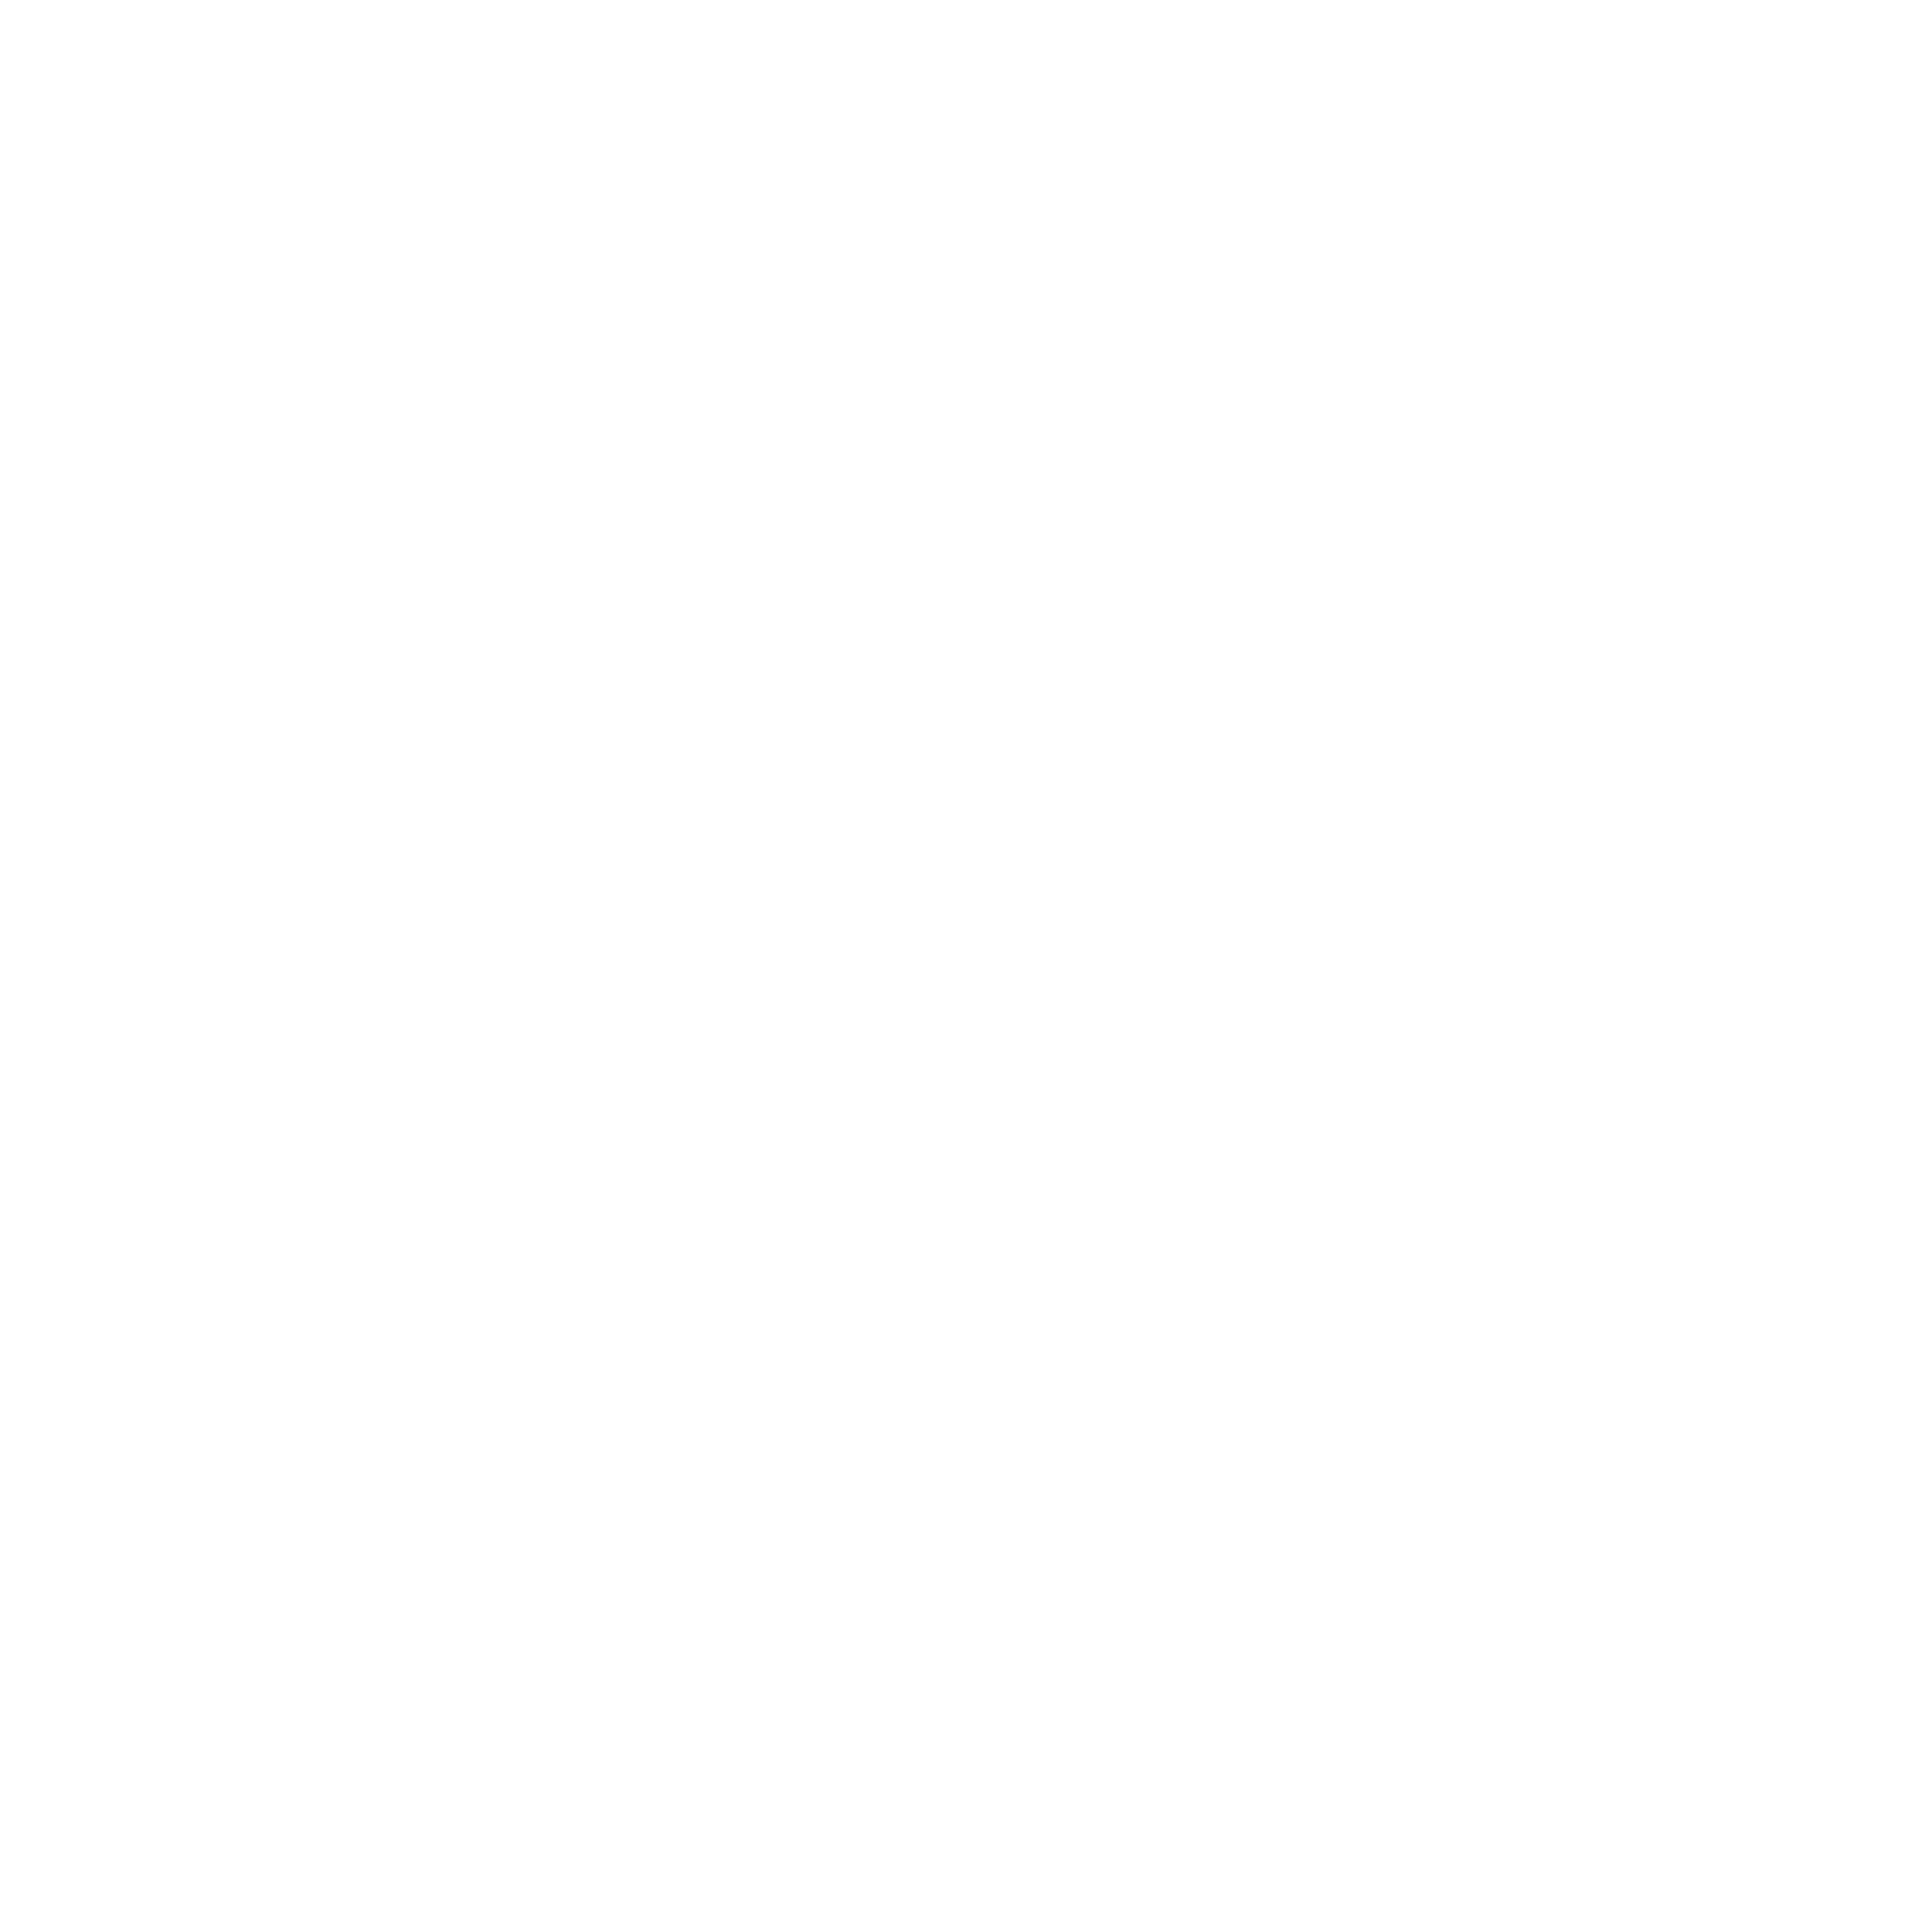 probloodeborne-certified-logo